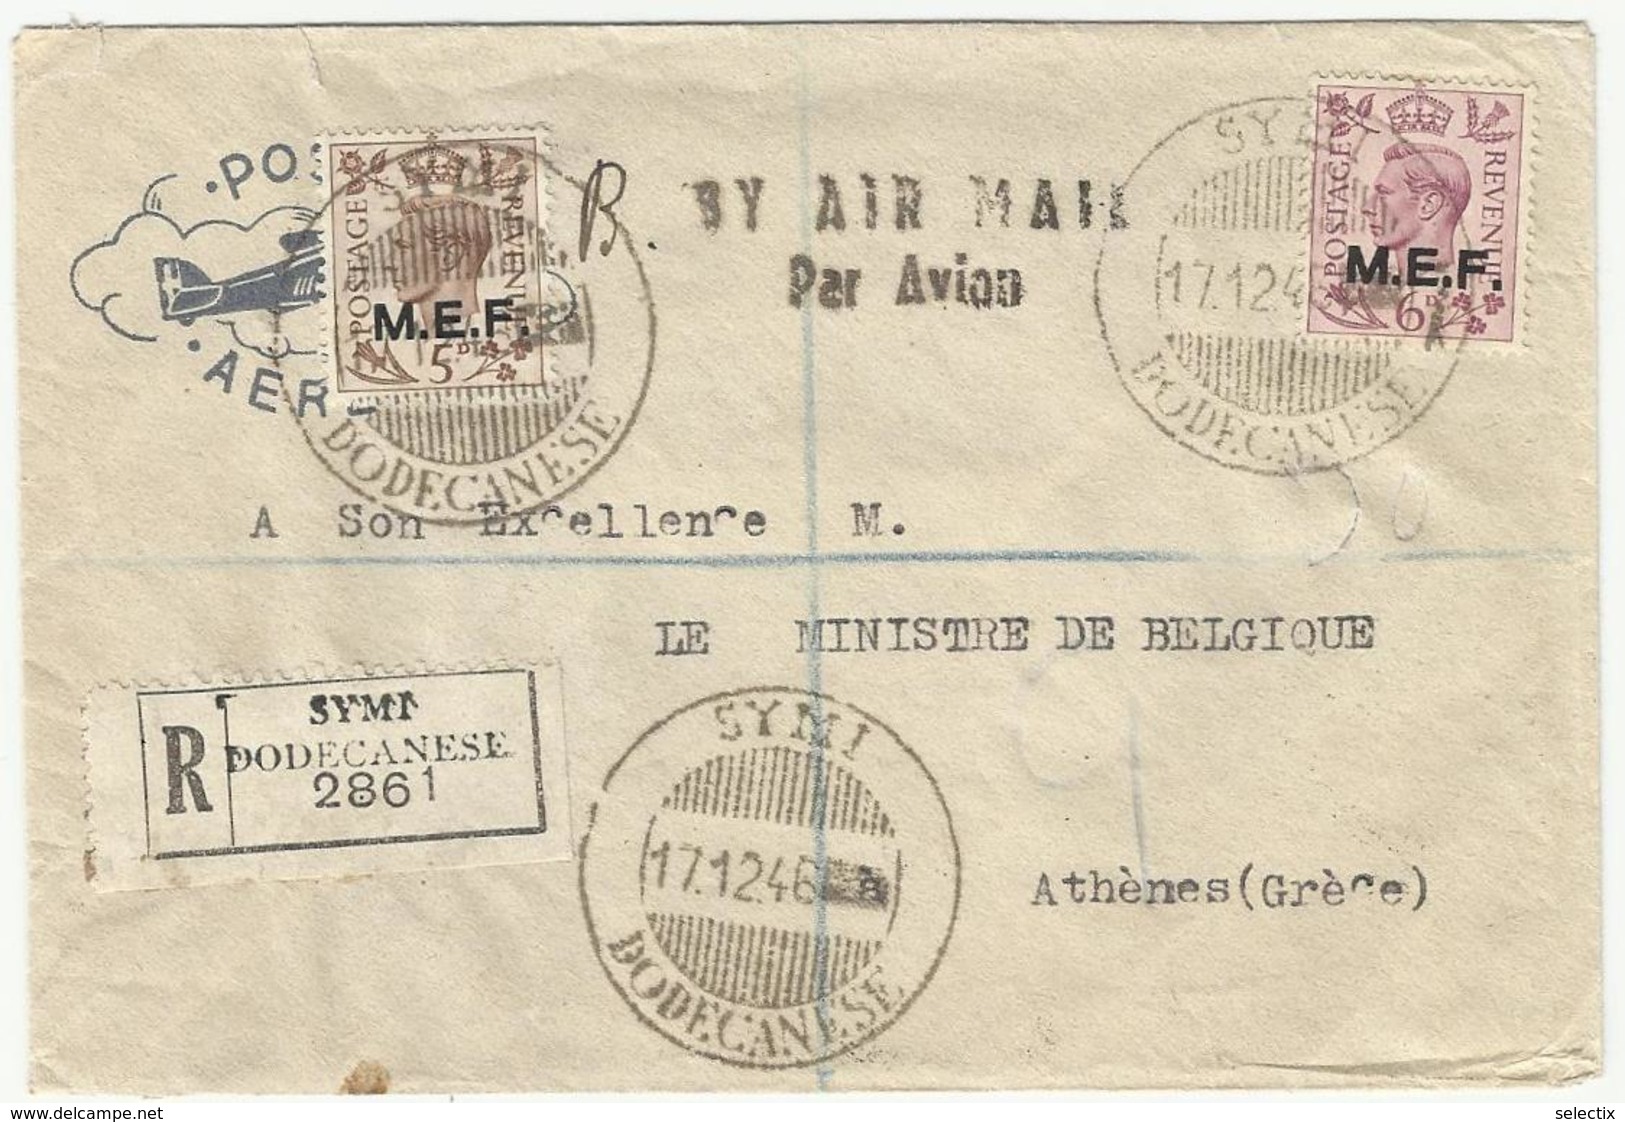 Greece 1946 Symi - British Occupation M.E.F. - Registered Cover - Dodekanisos